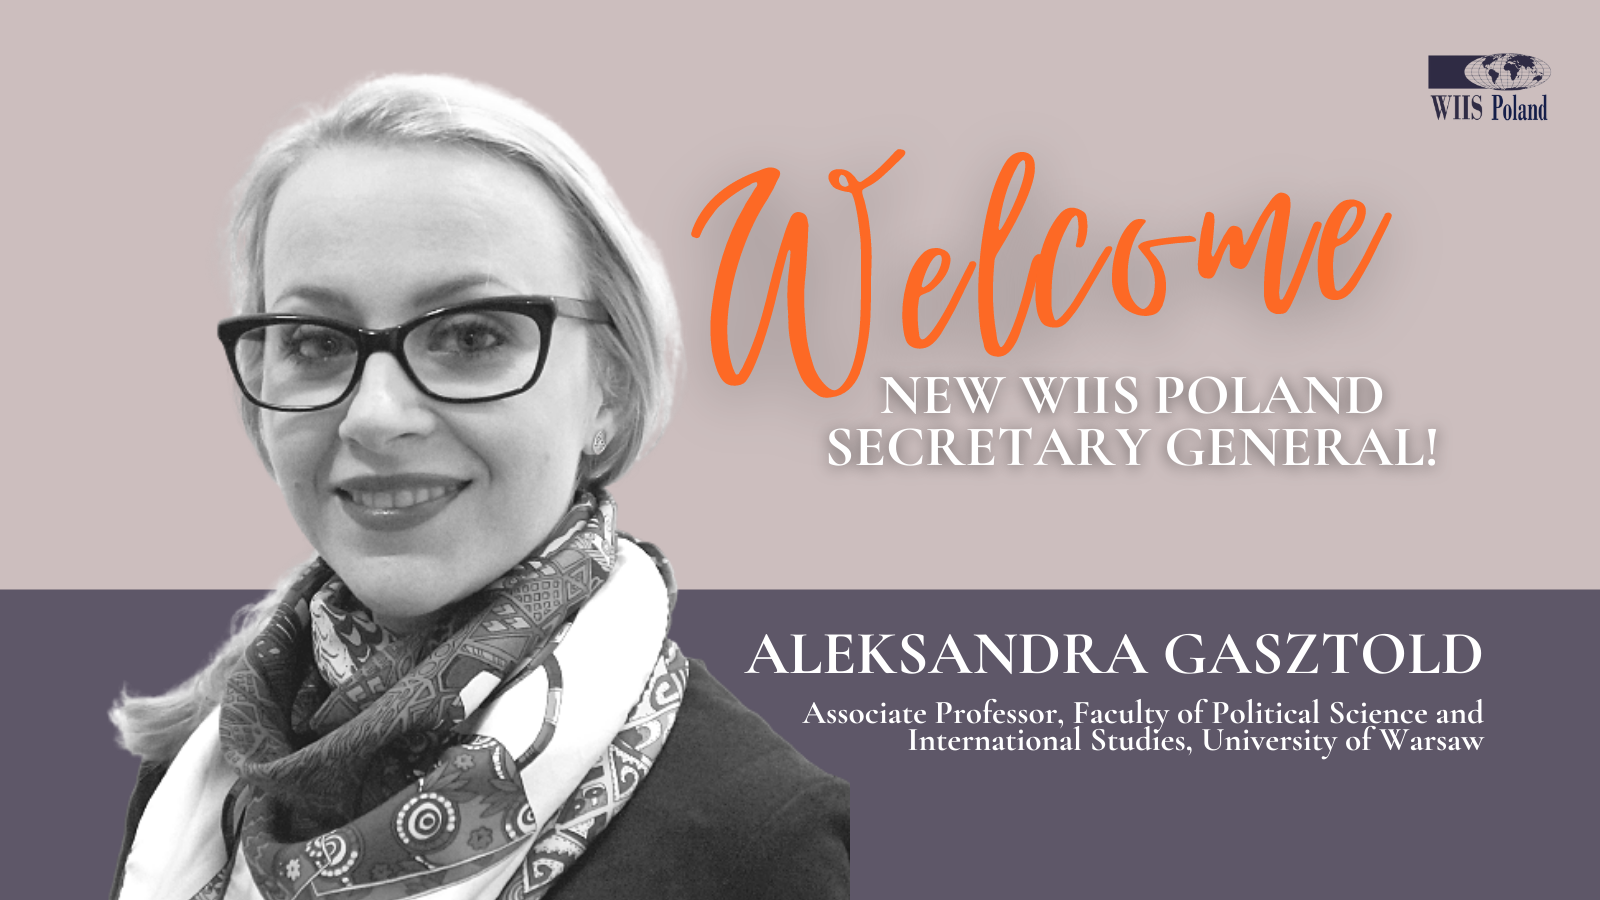 Welcome new WIIS Poland Secretary General!